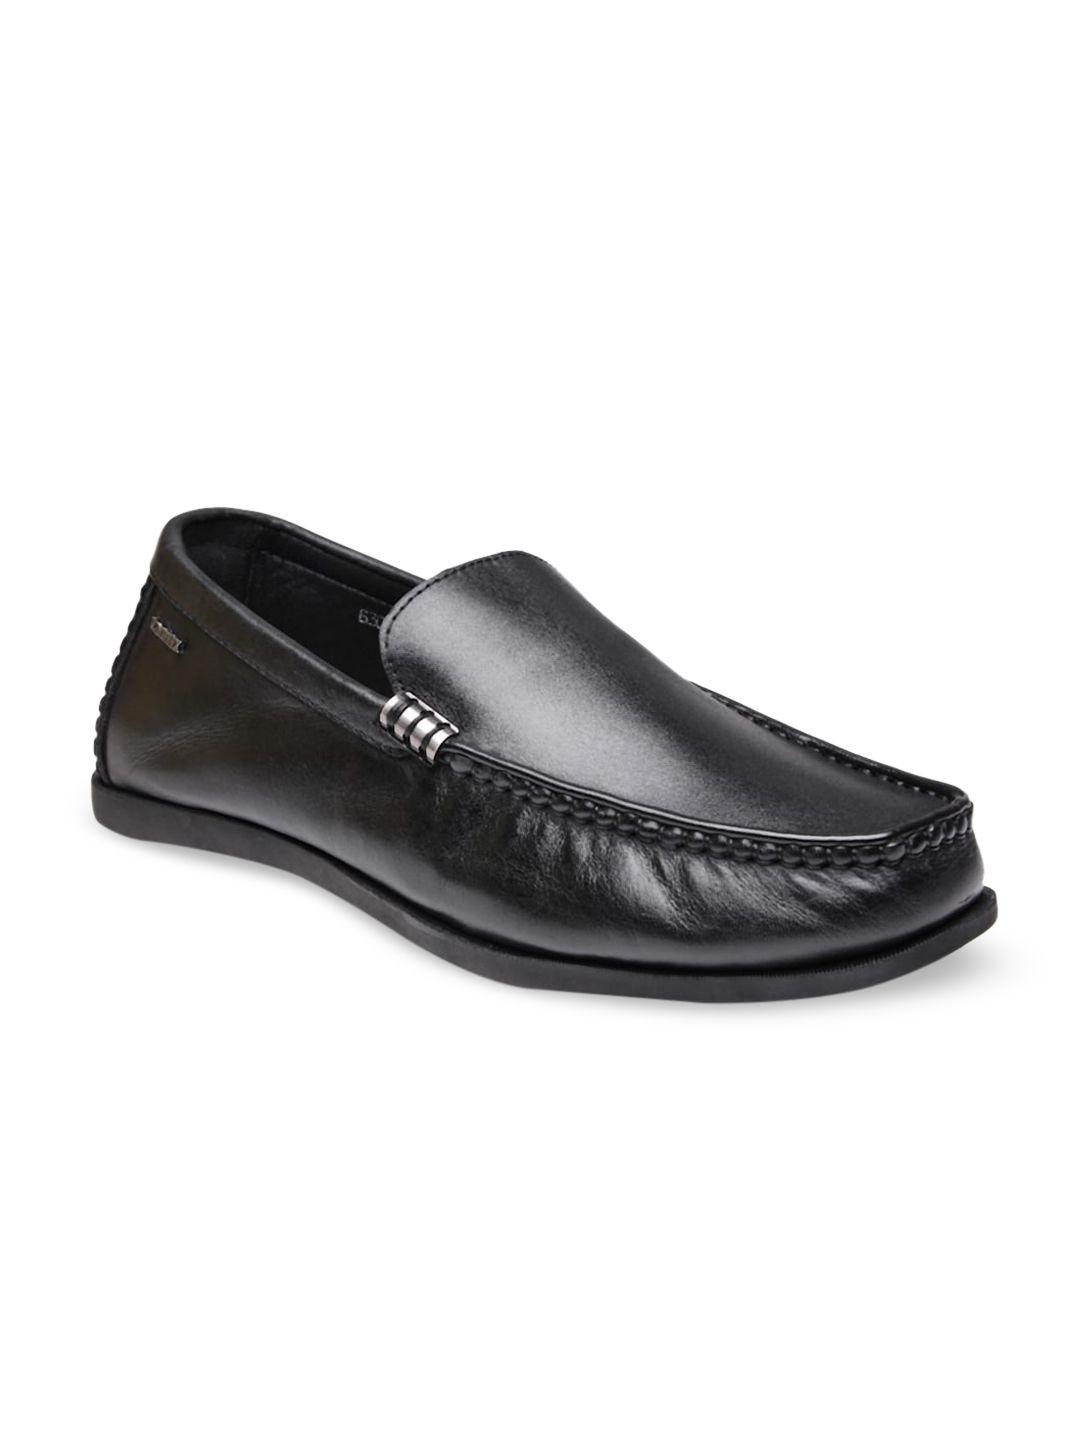 von wellx germany men black textured leather loafers